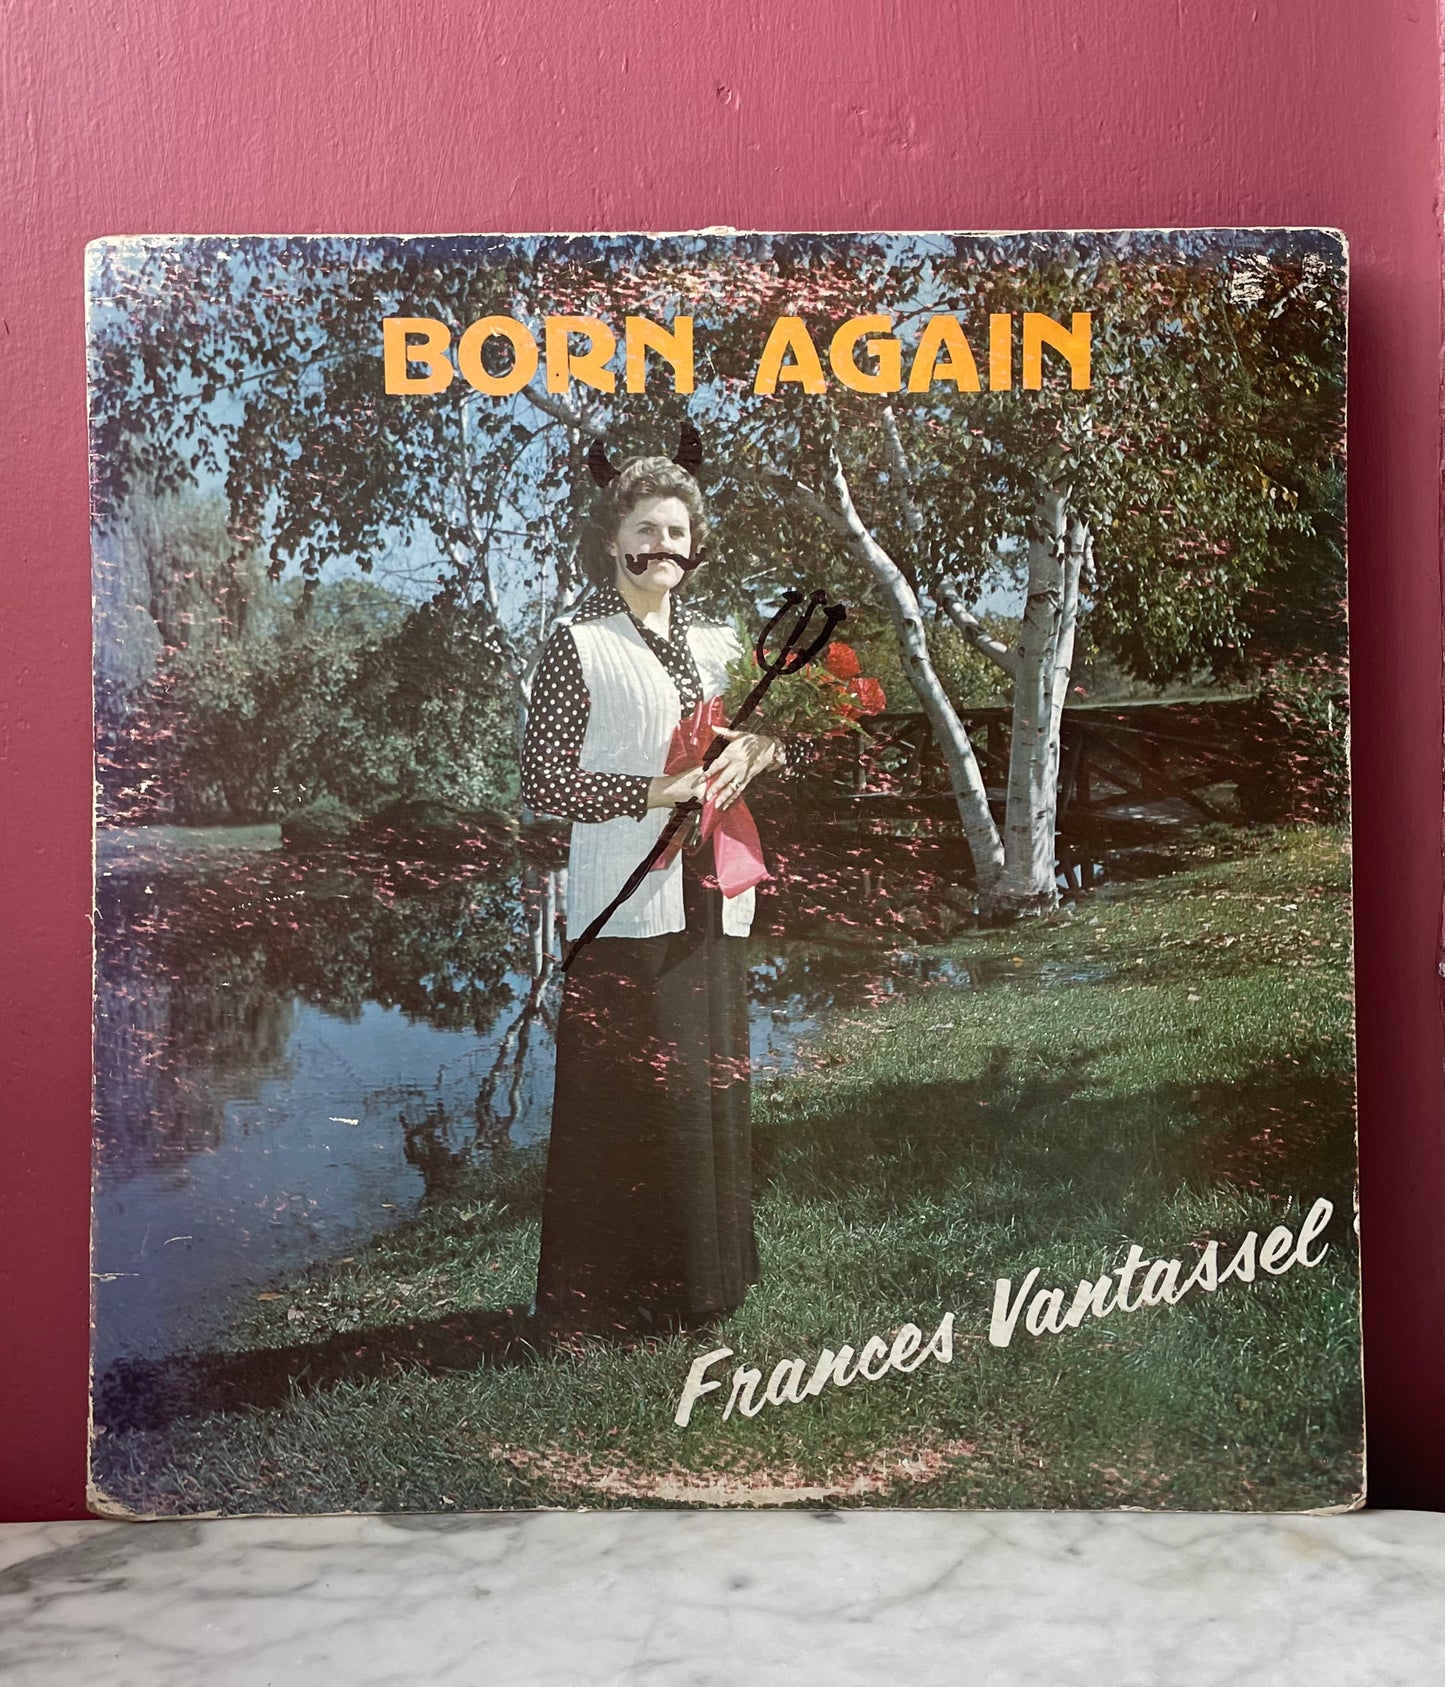 Born Again by Frances Vantassel | Vintage Pentecostal Record | 1975